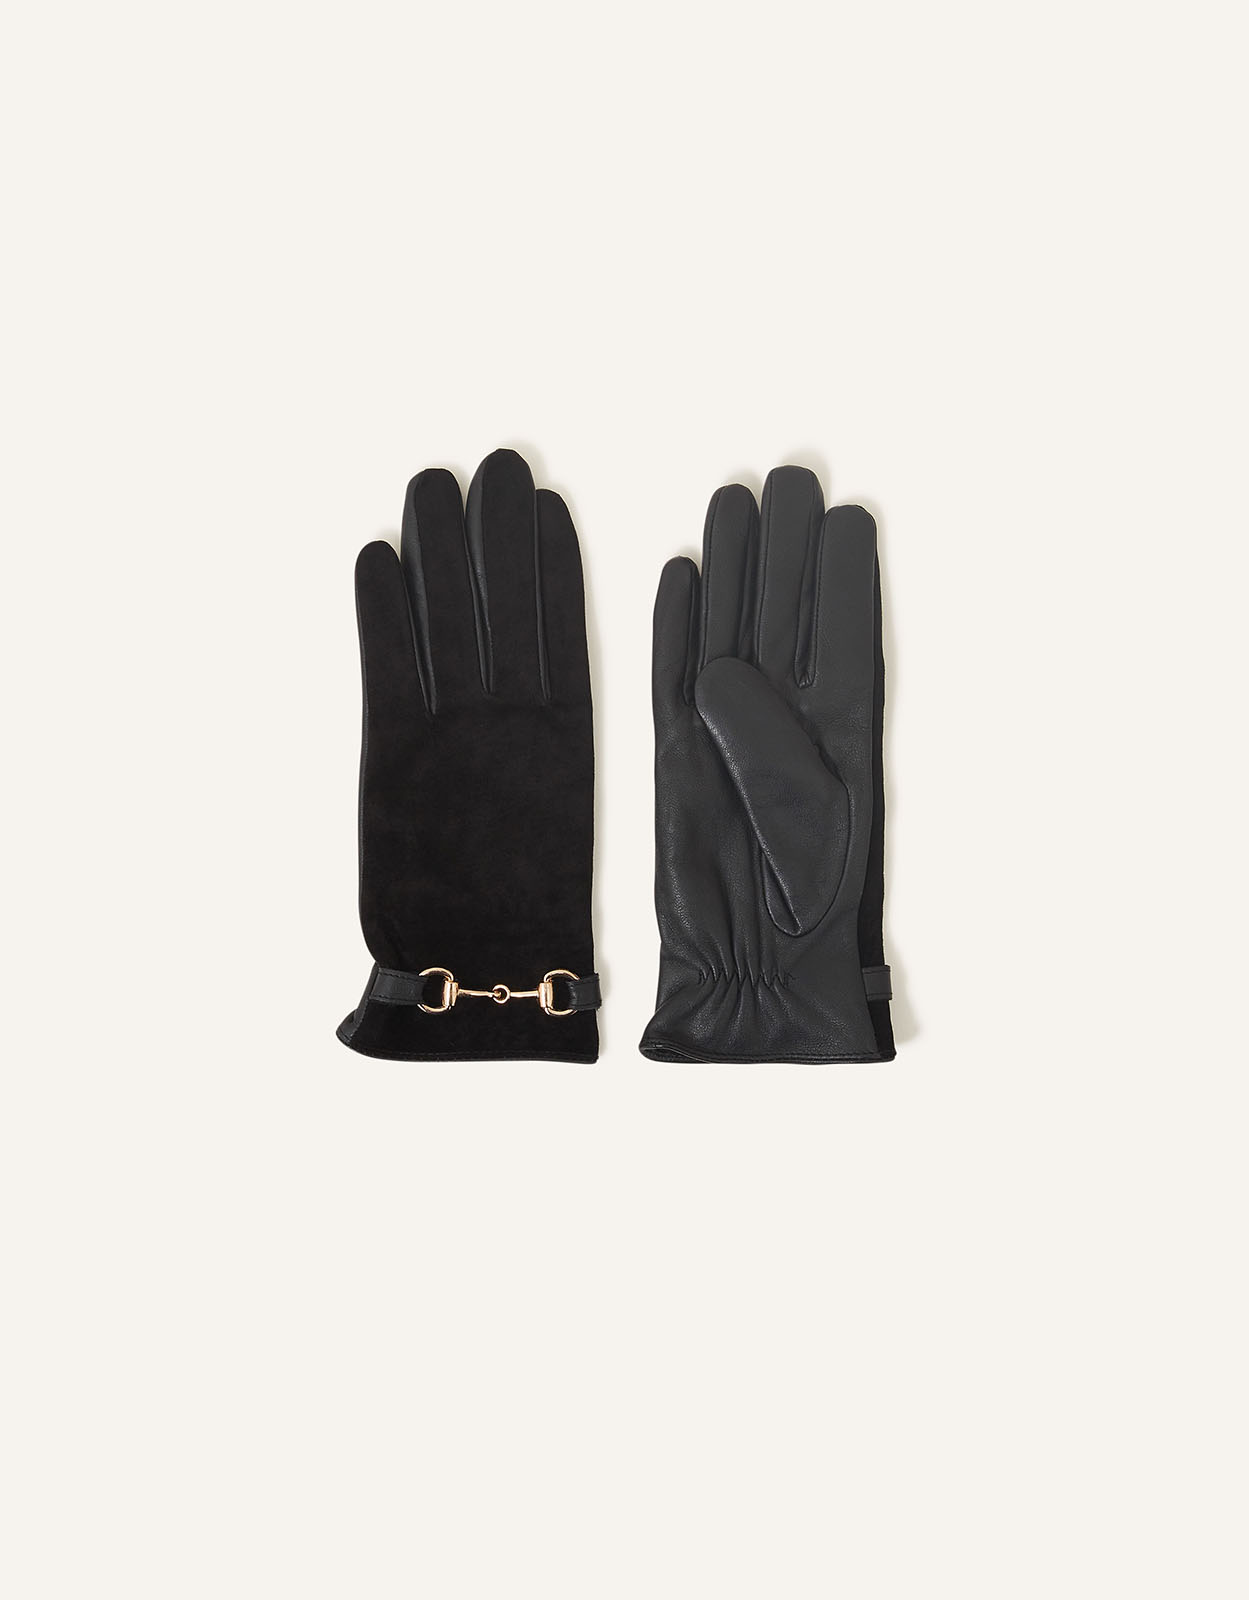 Accessorize Women's Leather Horsebit Gloves Black, Size: Small/ Medium